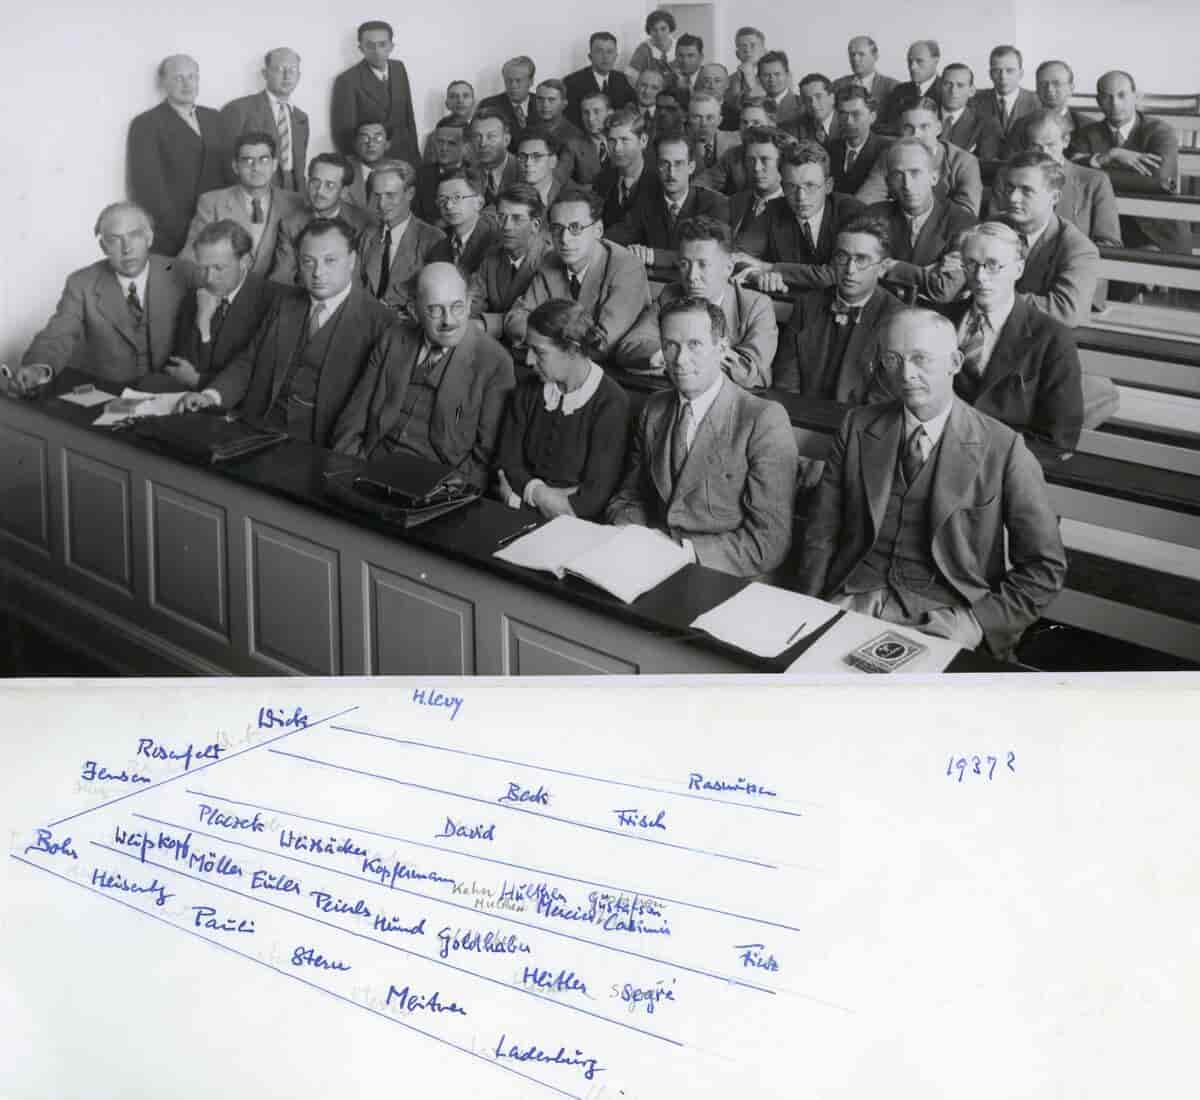 Fysikermøde på Niels Bohrs Institut for Teoretisk Fysik i 1937 